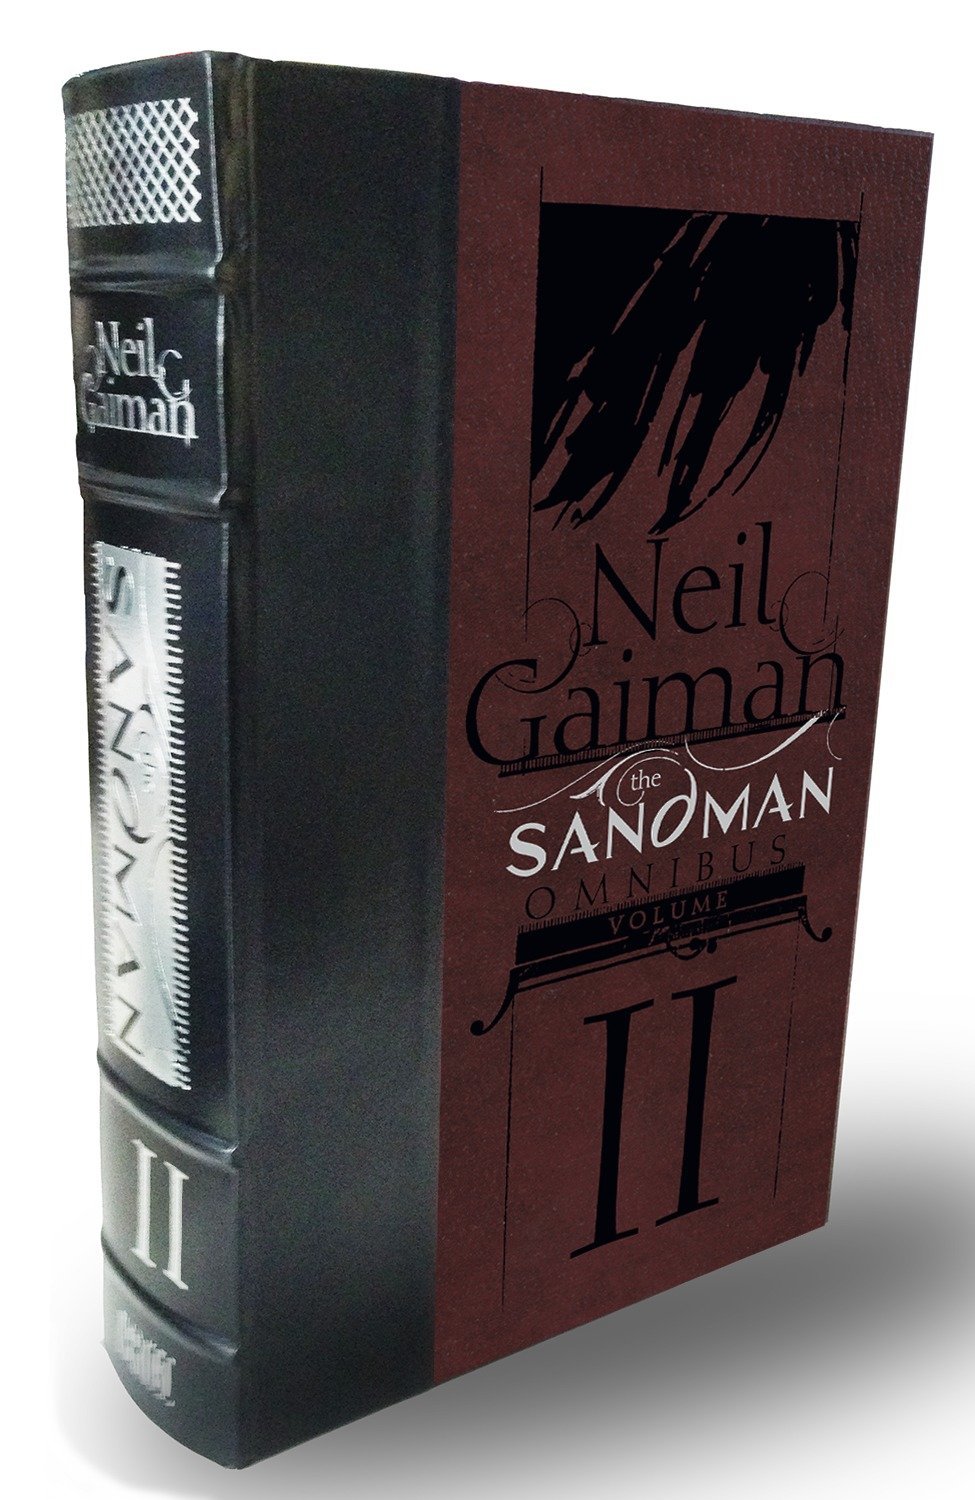 Neil Gaiman's The Sandman Omnibus Volume 2 Hardcover Tome $68.17 + Free Shipping